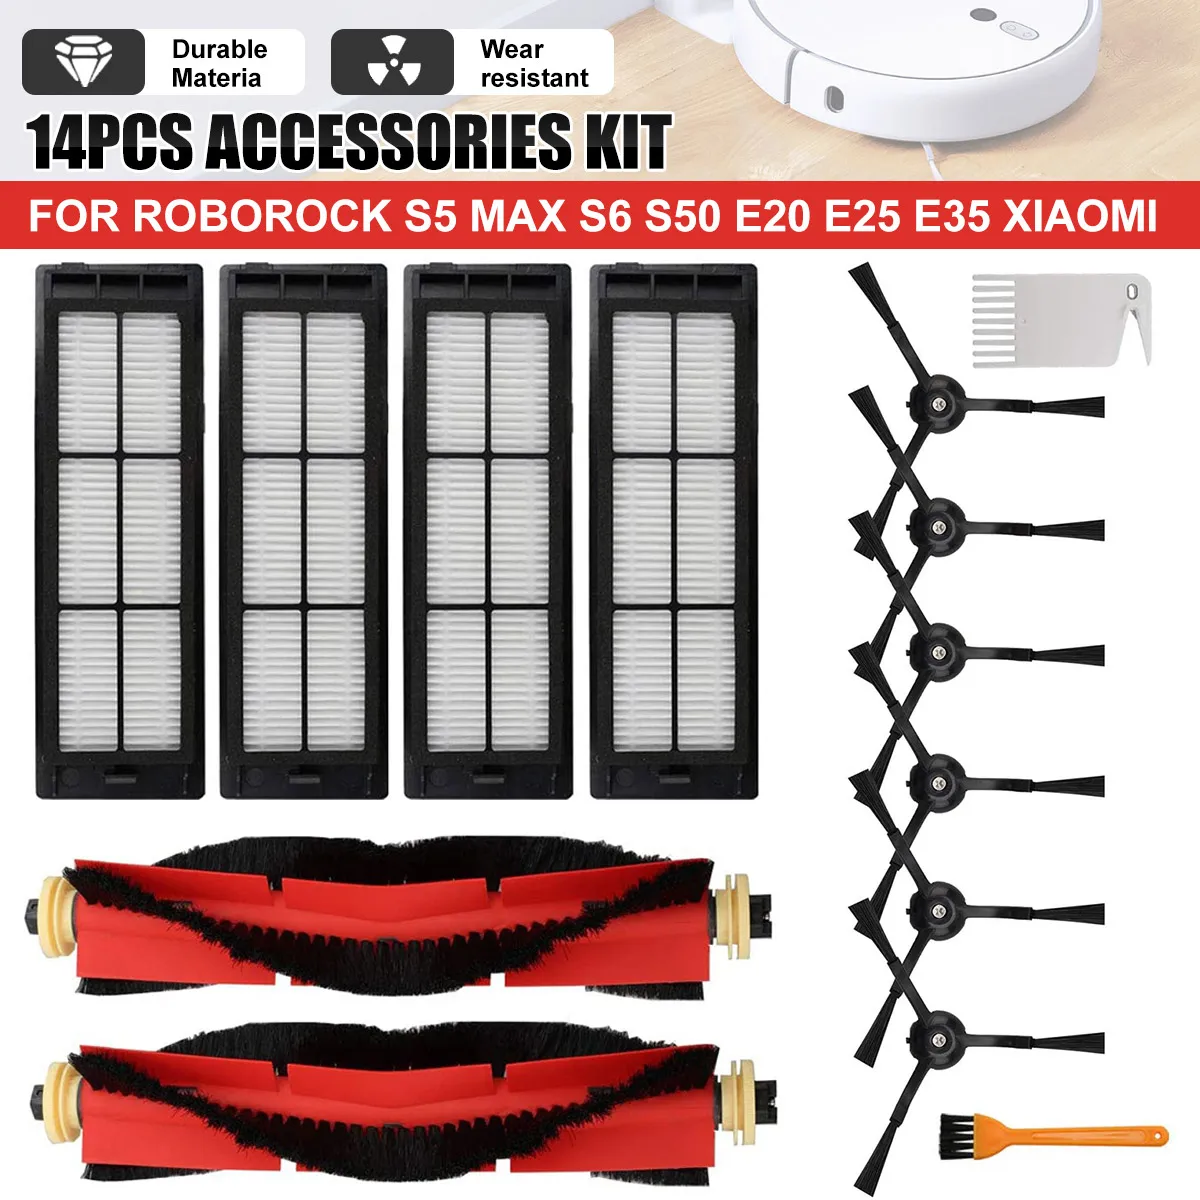 14pcs Accessories Kit for Roborock S5 MAX S6 S50 E20 E25 E35 for Xiaomi for Mijia Robotic Vacuum Cleaner Accessories home